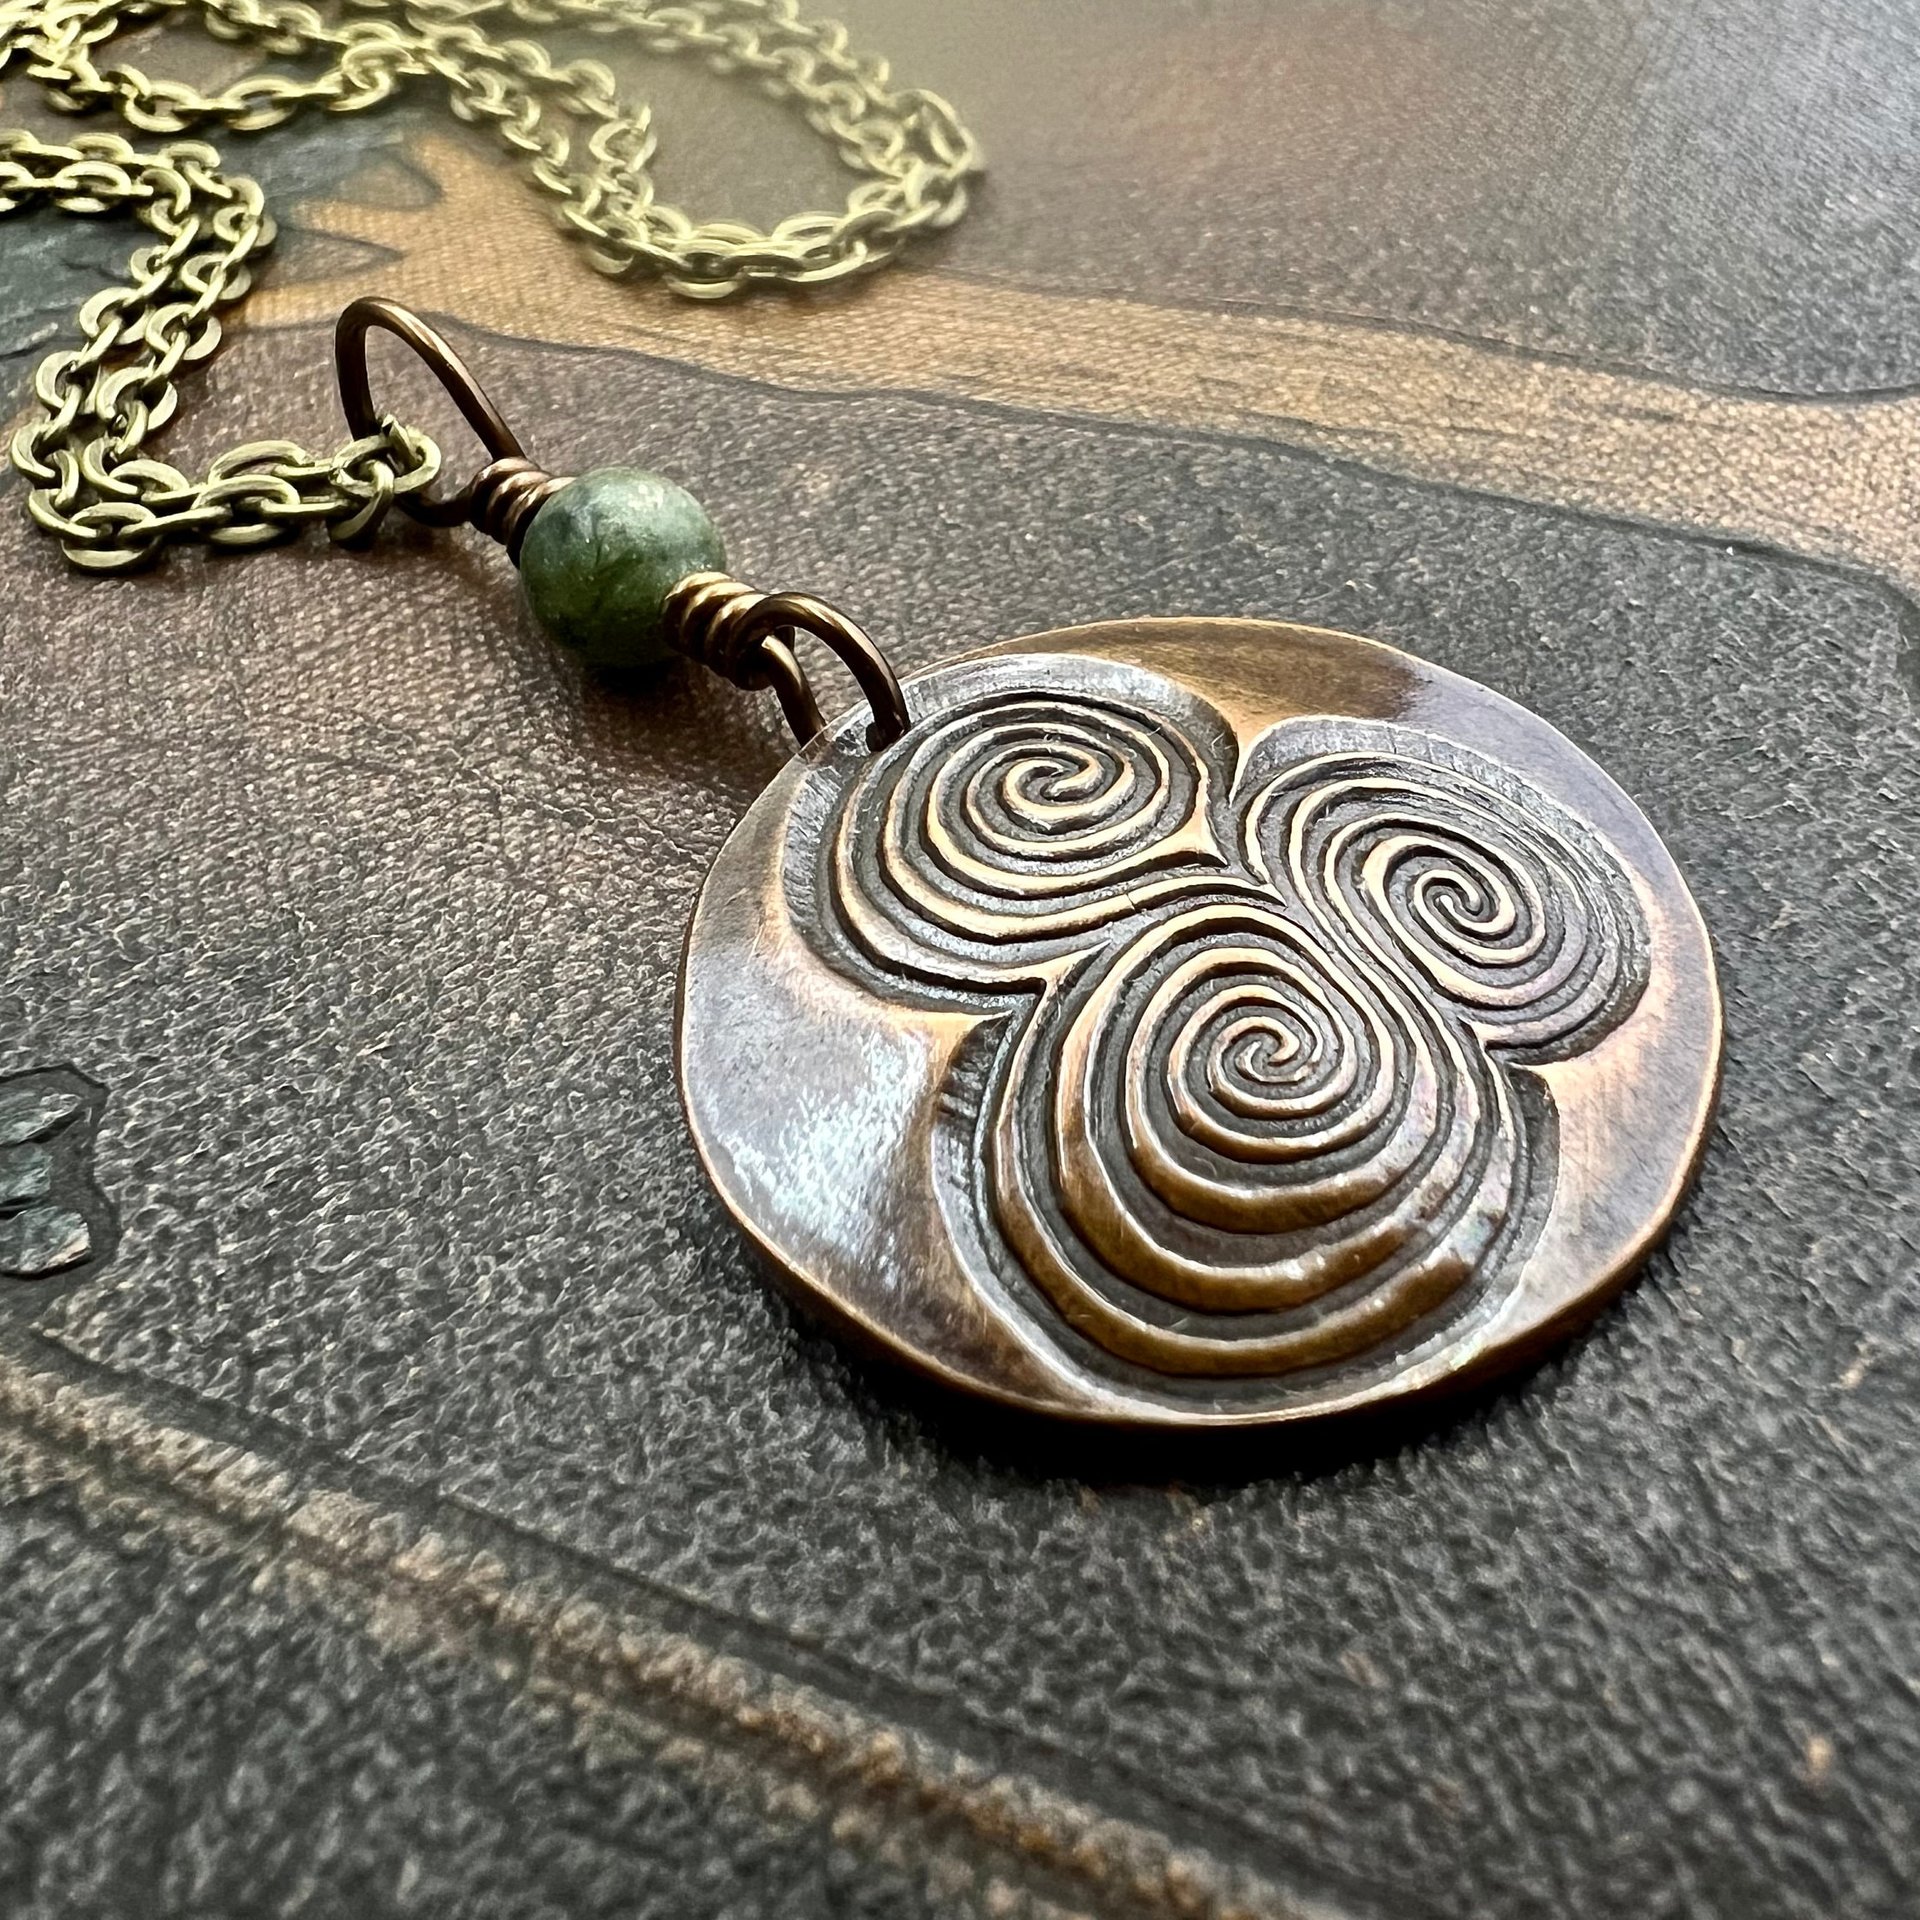 Newgrange Copper Pendant, Connemara Marble, Triskelion Triple Spiral, Irish Celtic Pagan, County Meath, Ireland, Celtic Witch, Irish Gifts